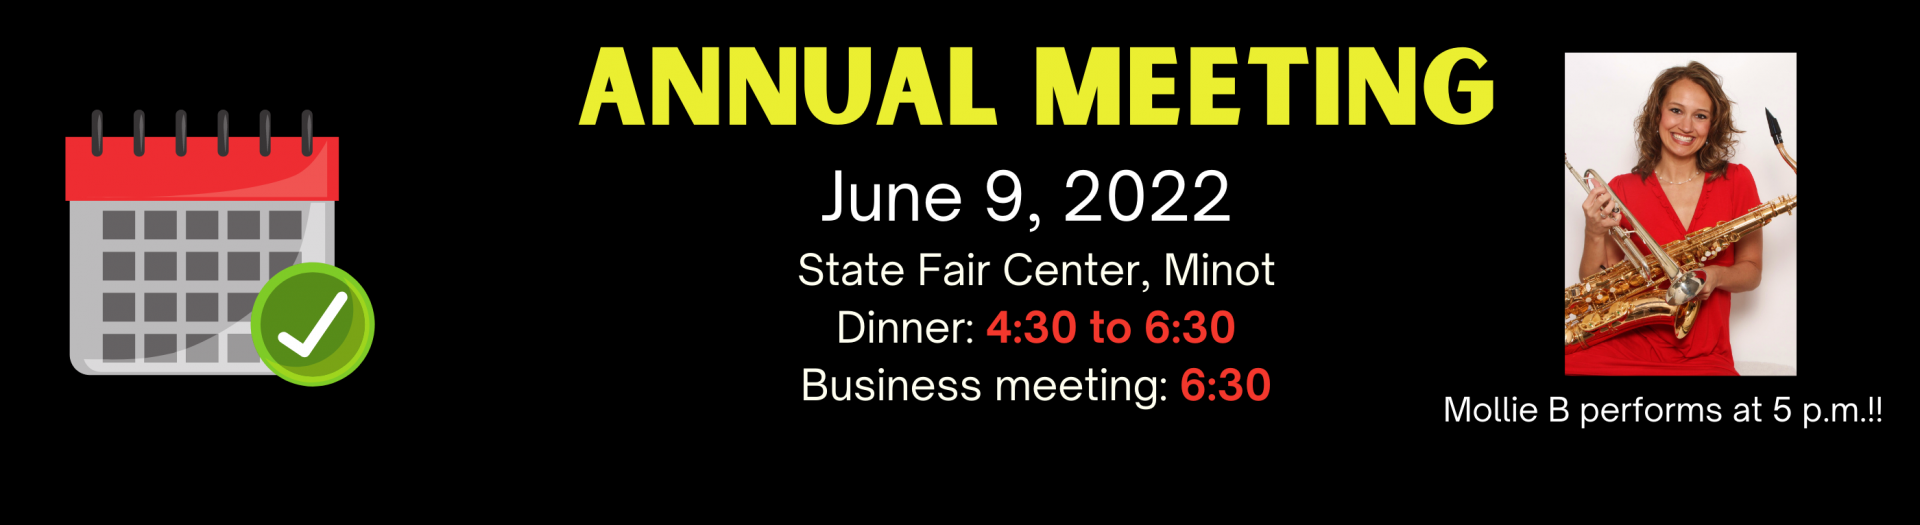 Annual Meeting Announcement